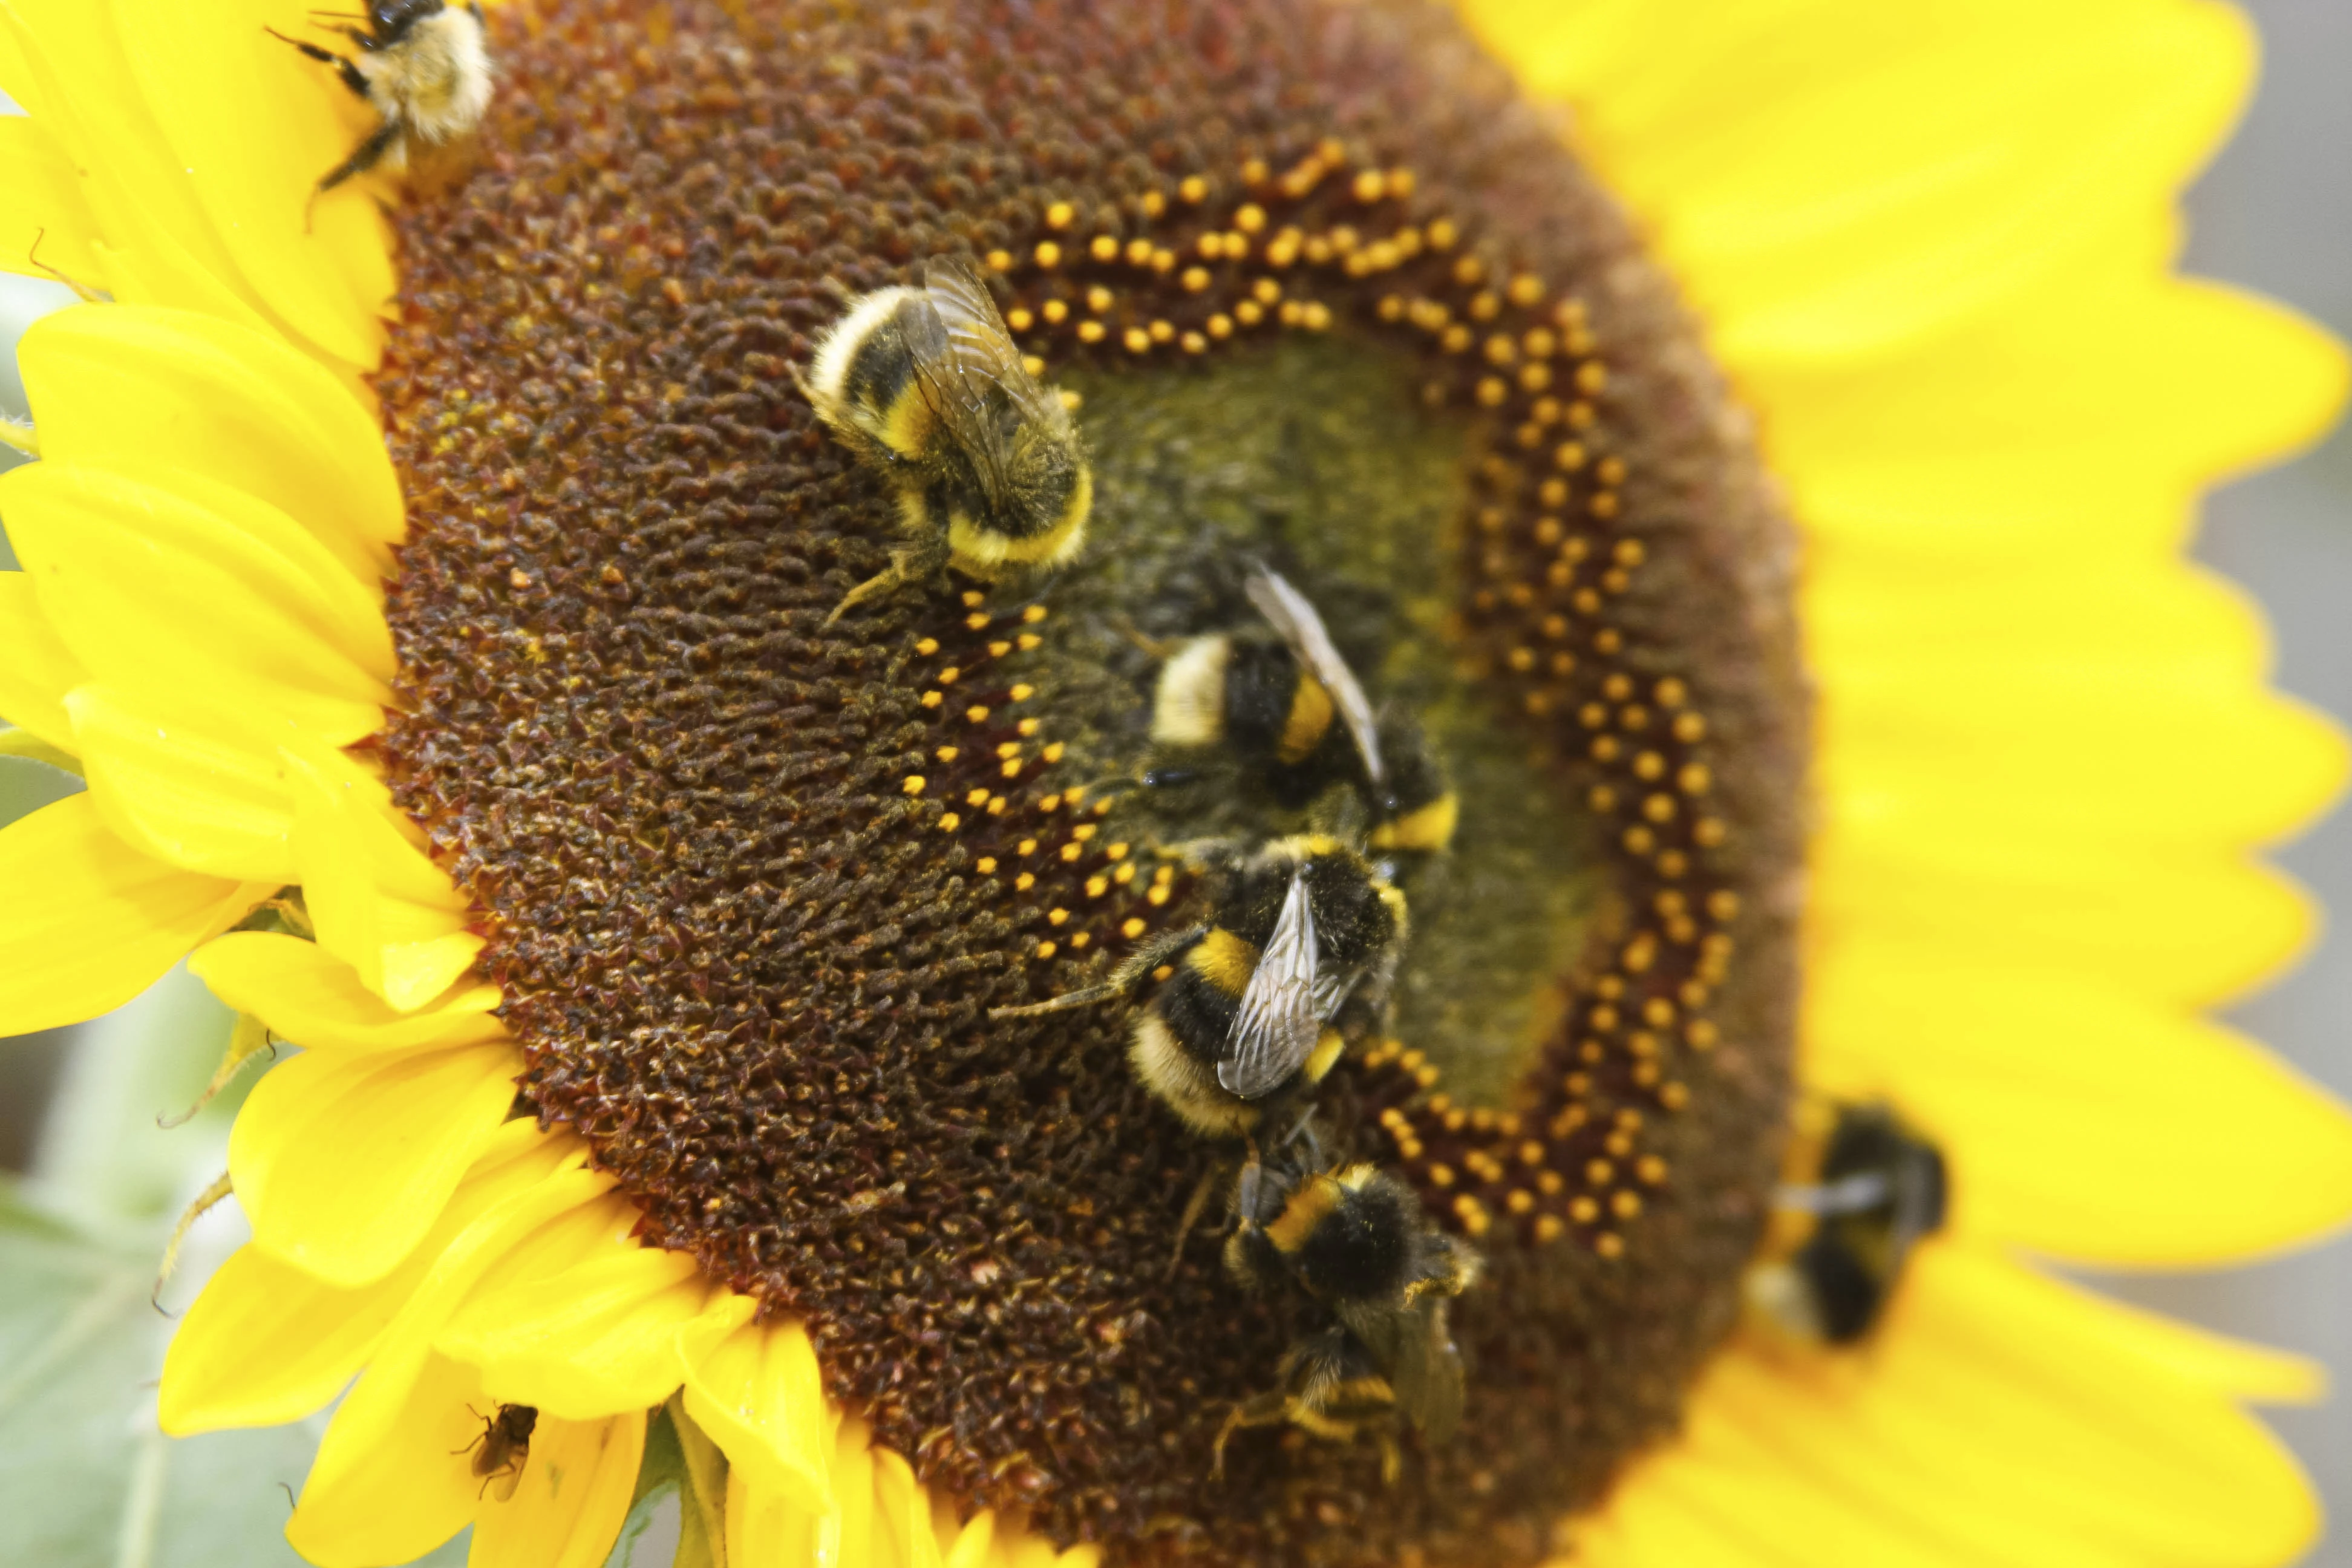 Buff-tailed bumblebees feeding on sunflower